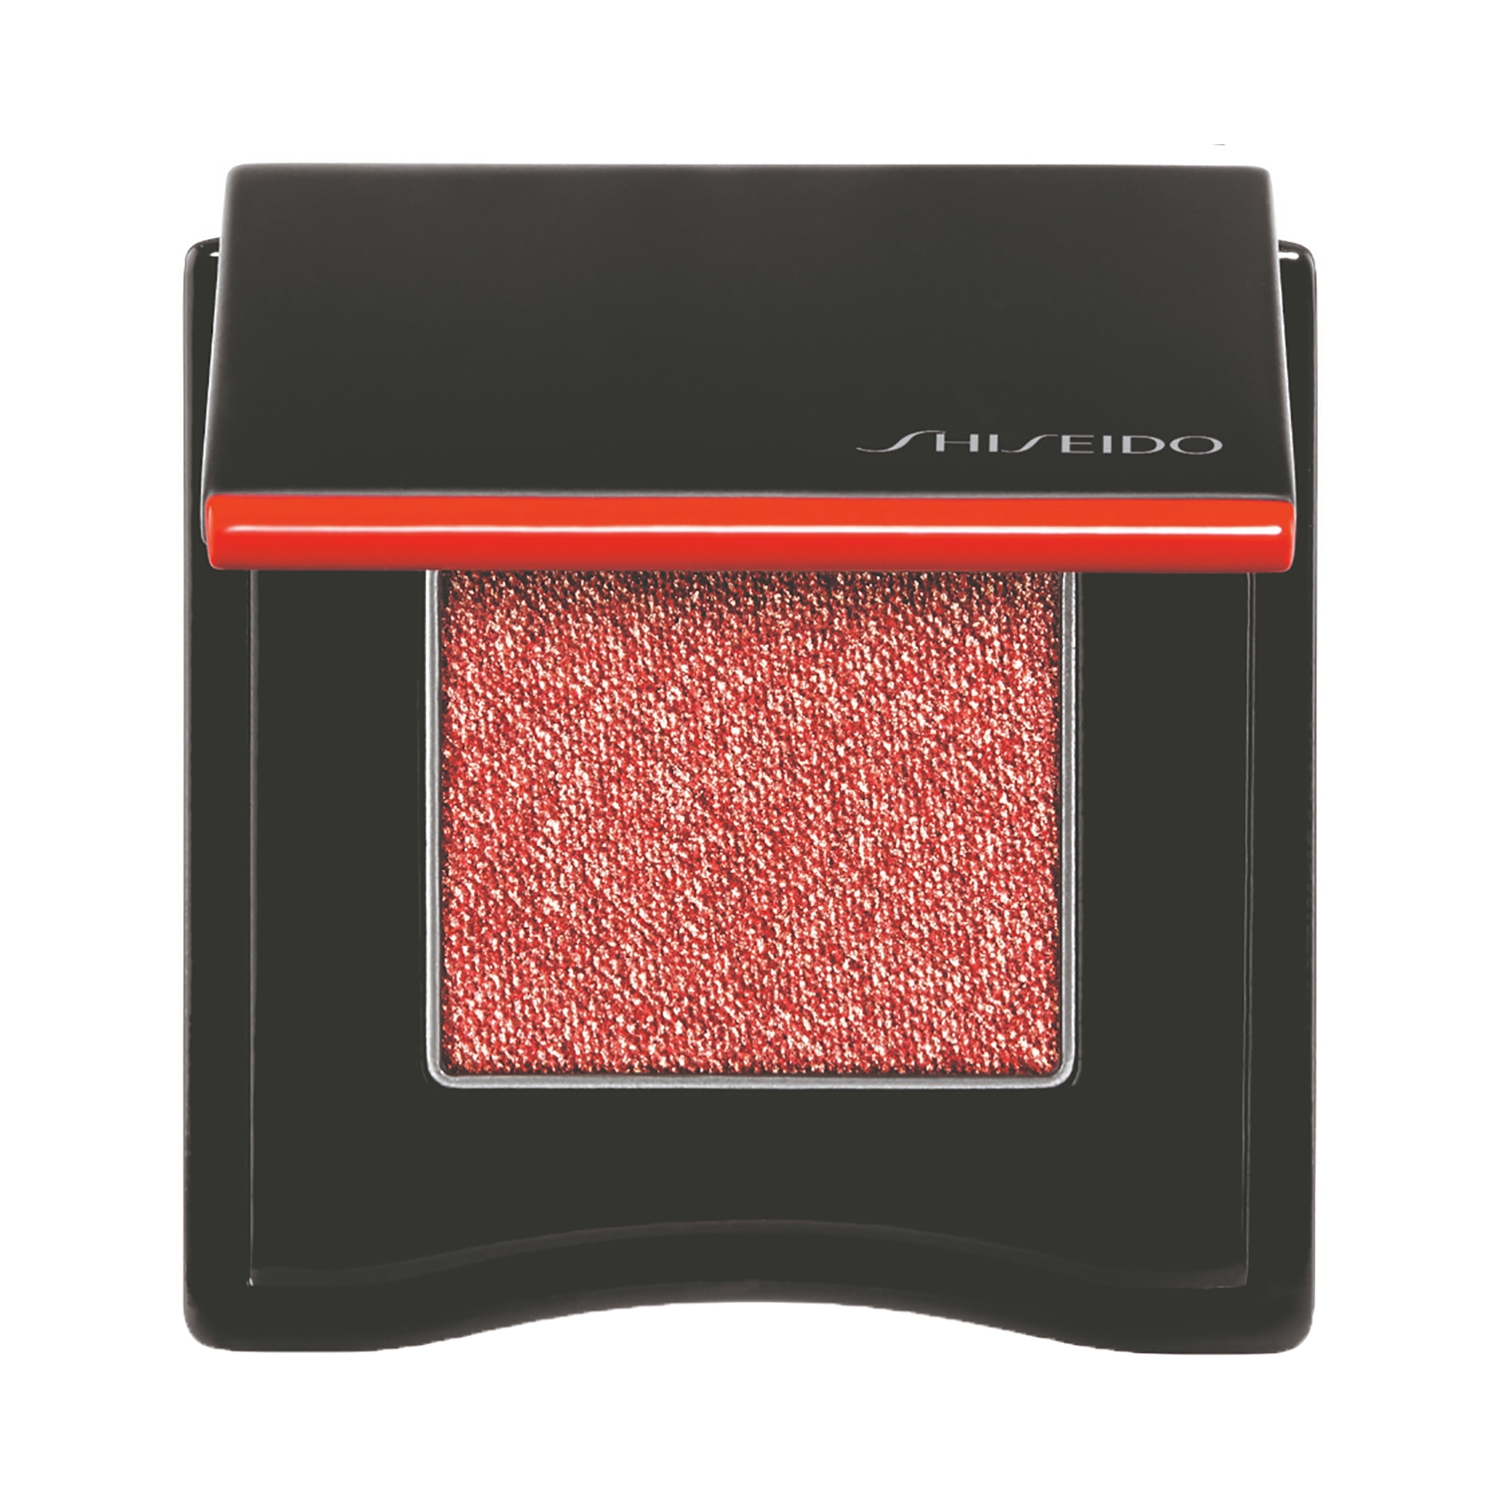 Shiseido Pop Powdergel Eye Shadow - 14 Kura Coral (2.2g)